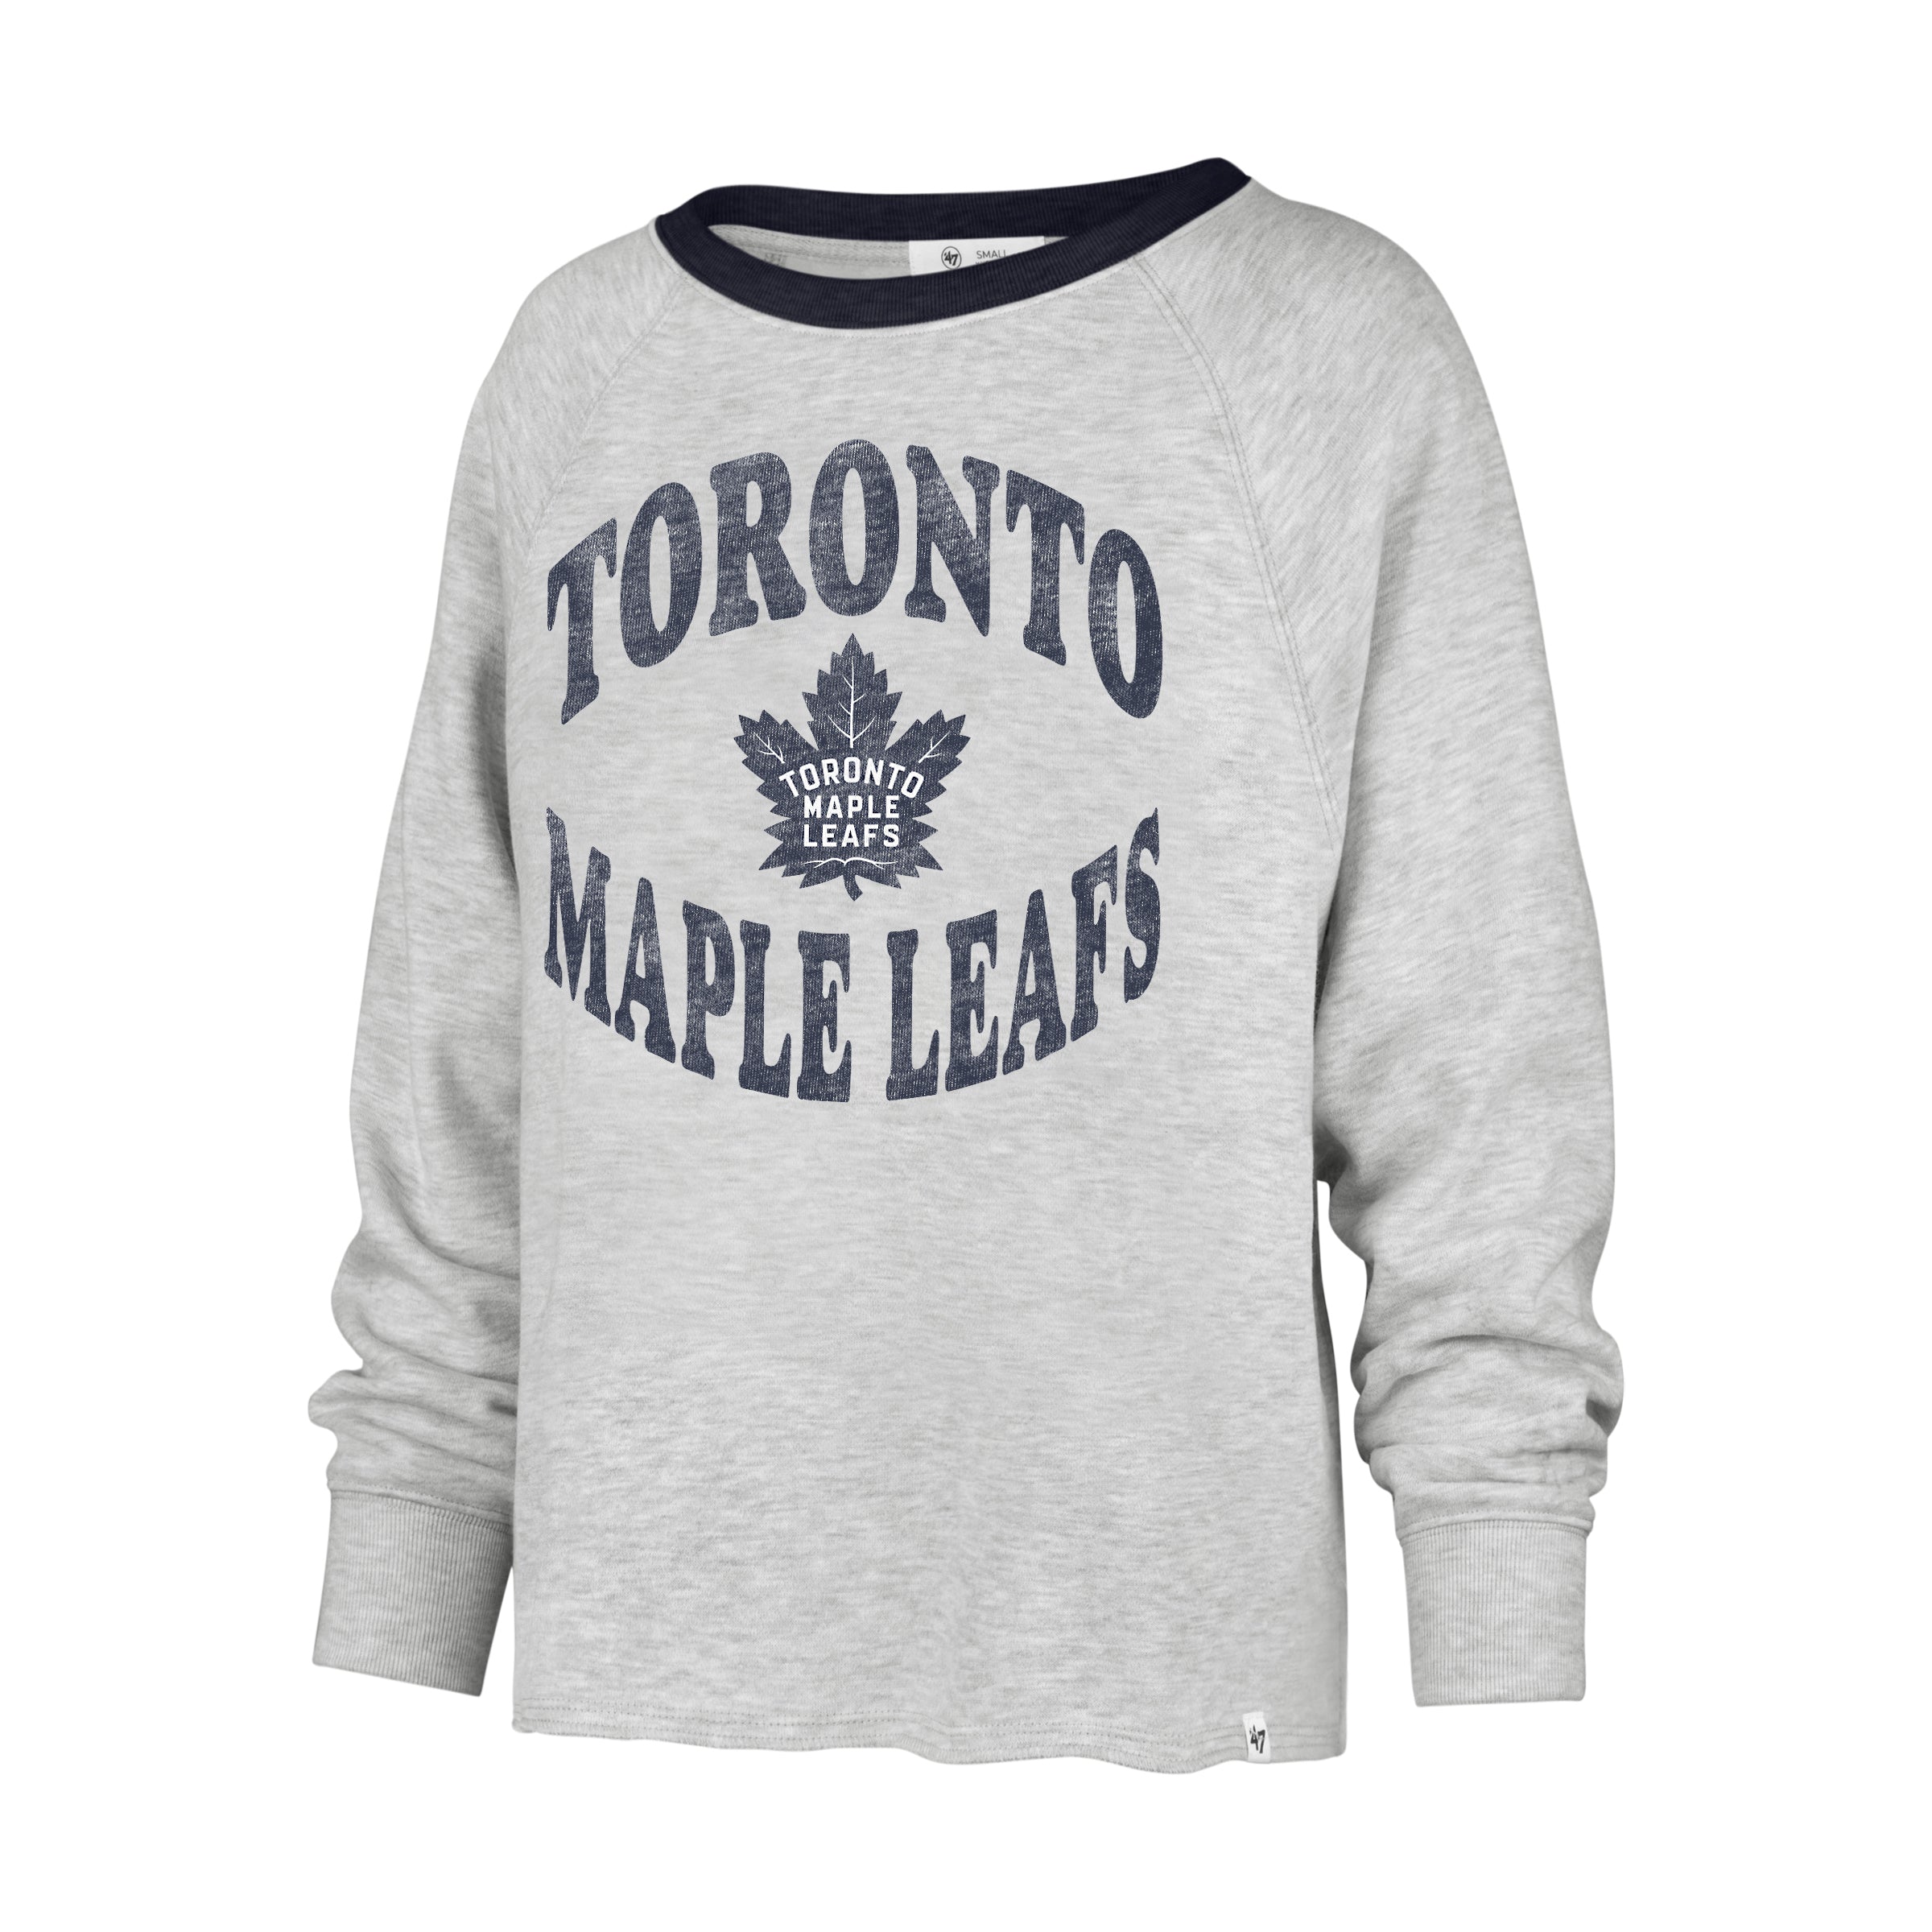 Toronto Maple Leafs Ladies Crew Sweatshirts, Maple Leafs Ladies